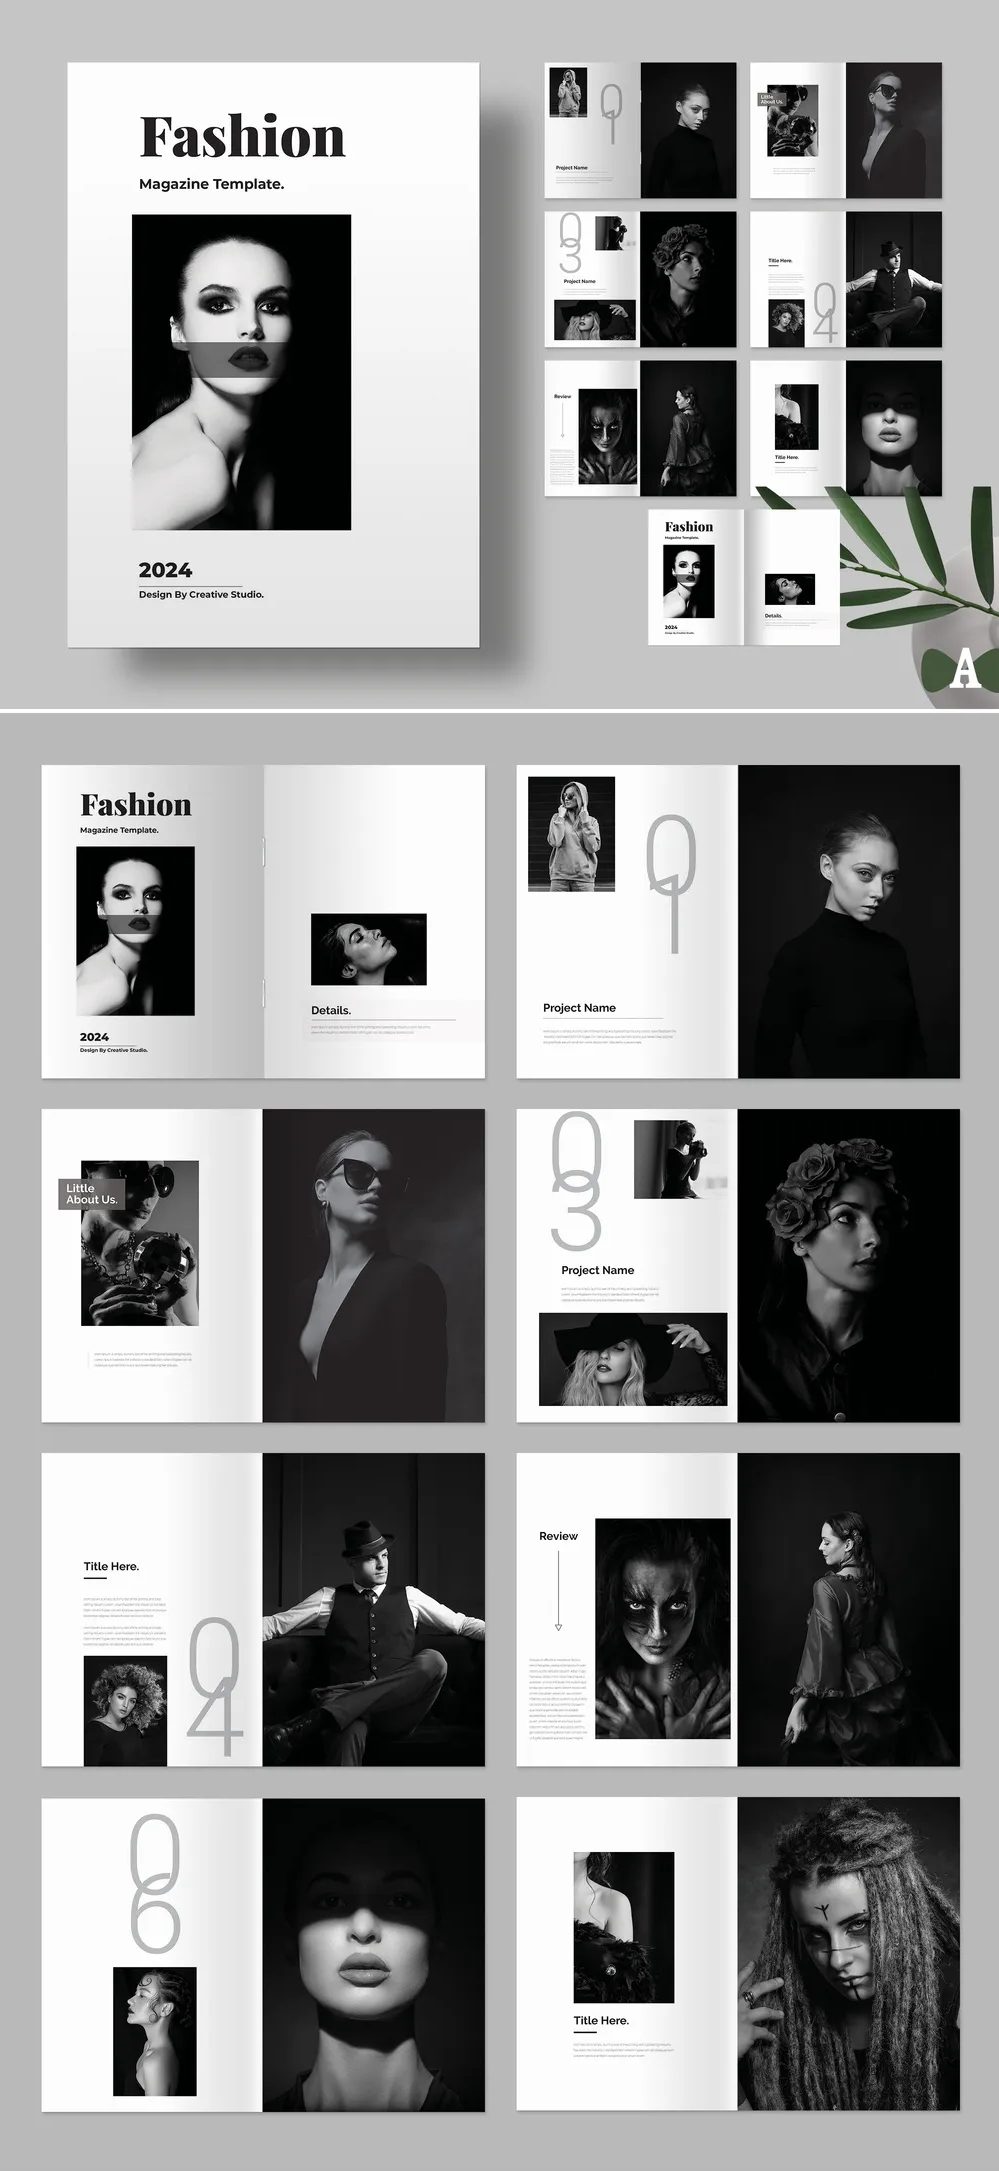 Adobestock - Fashion Magazine Template 722053351